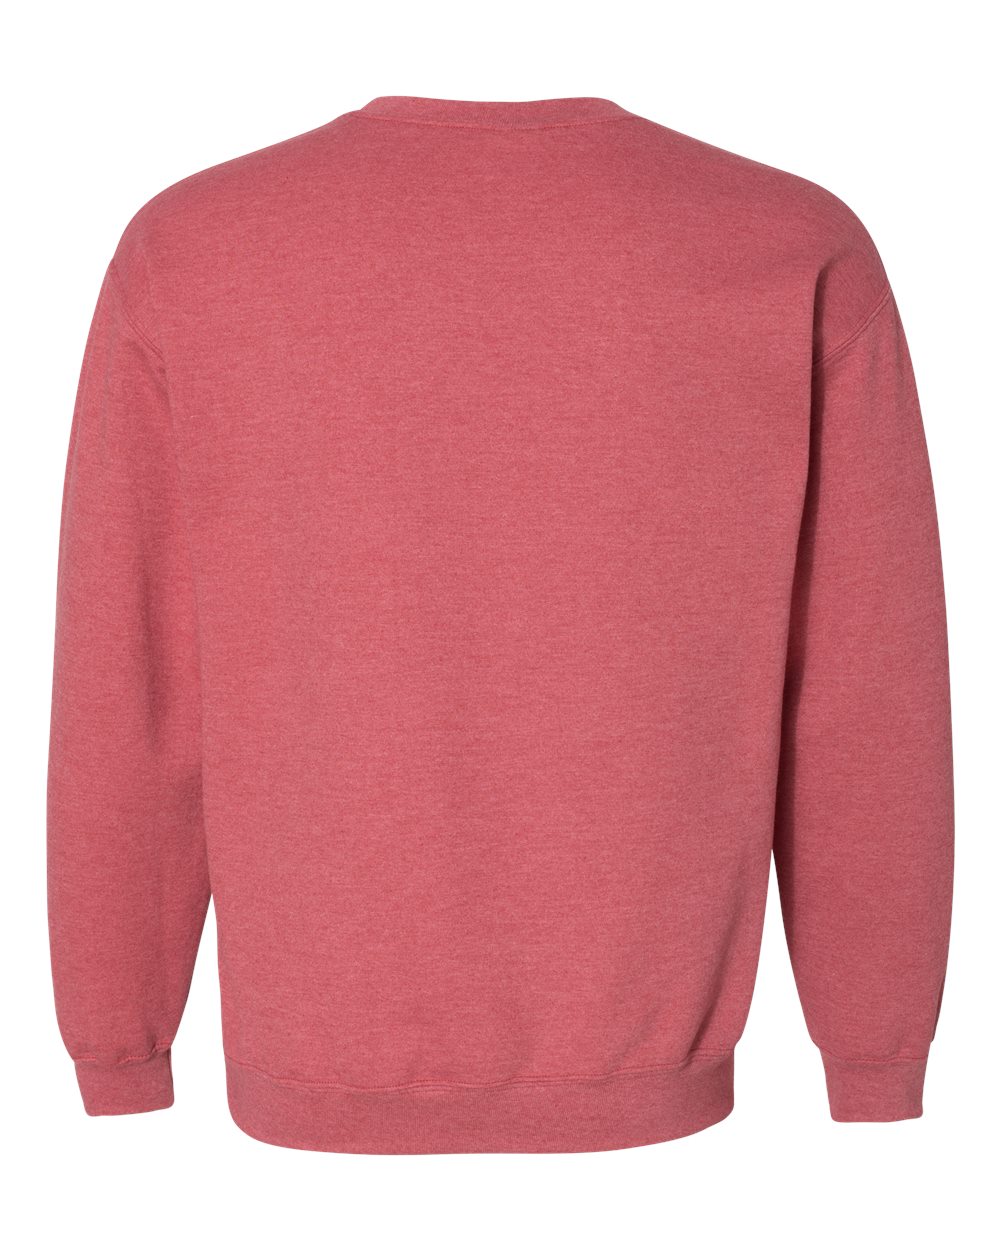 Gildan Mens Heavy Blend Crewneck Sweatshirt Blank 18000 up to 5XL | eBay